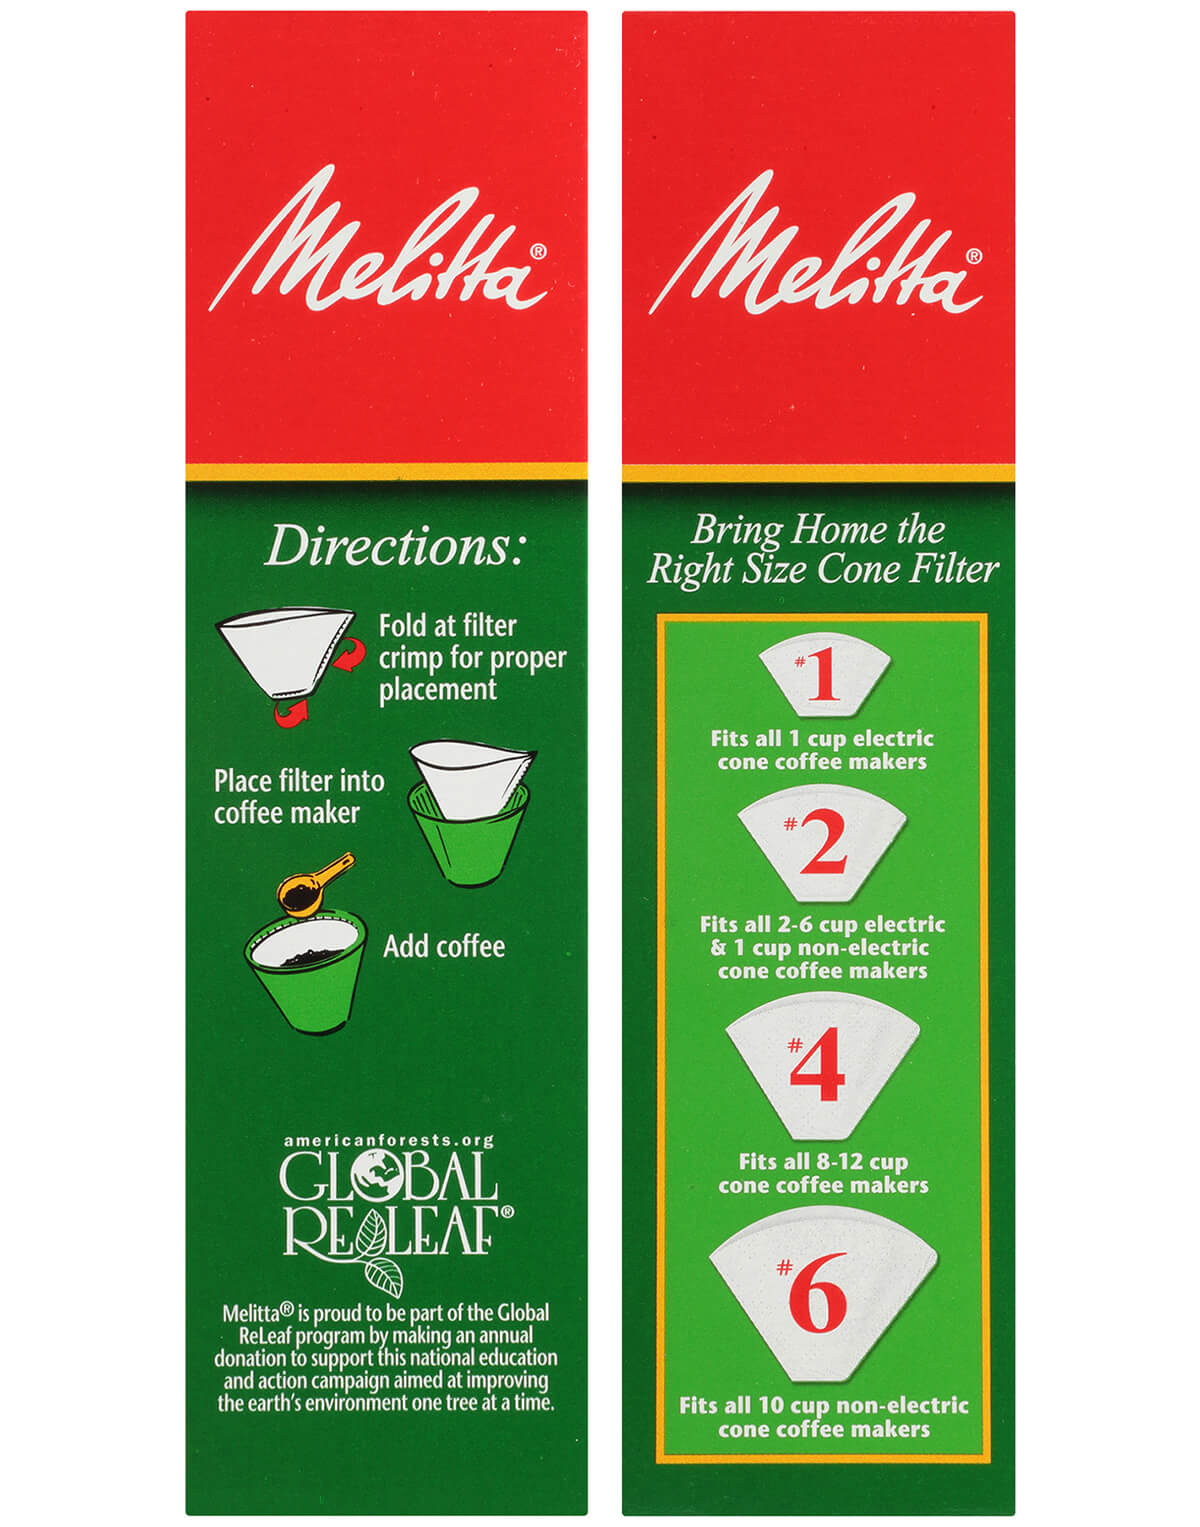 Melitta #4 Filters - Driven Coffee